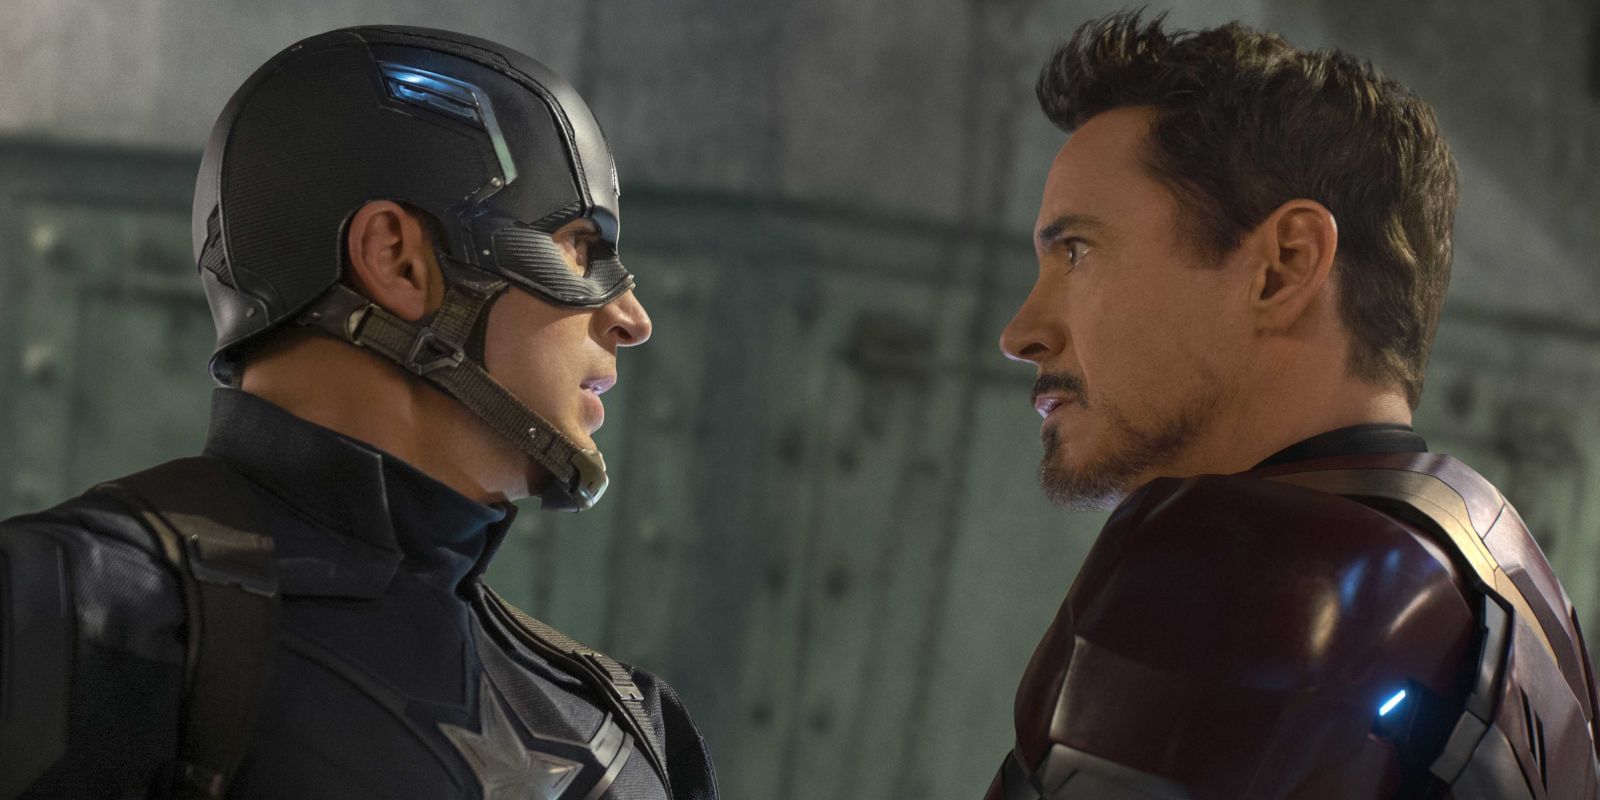 Captain America vs Iron Man in Captain America Civil War